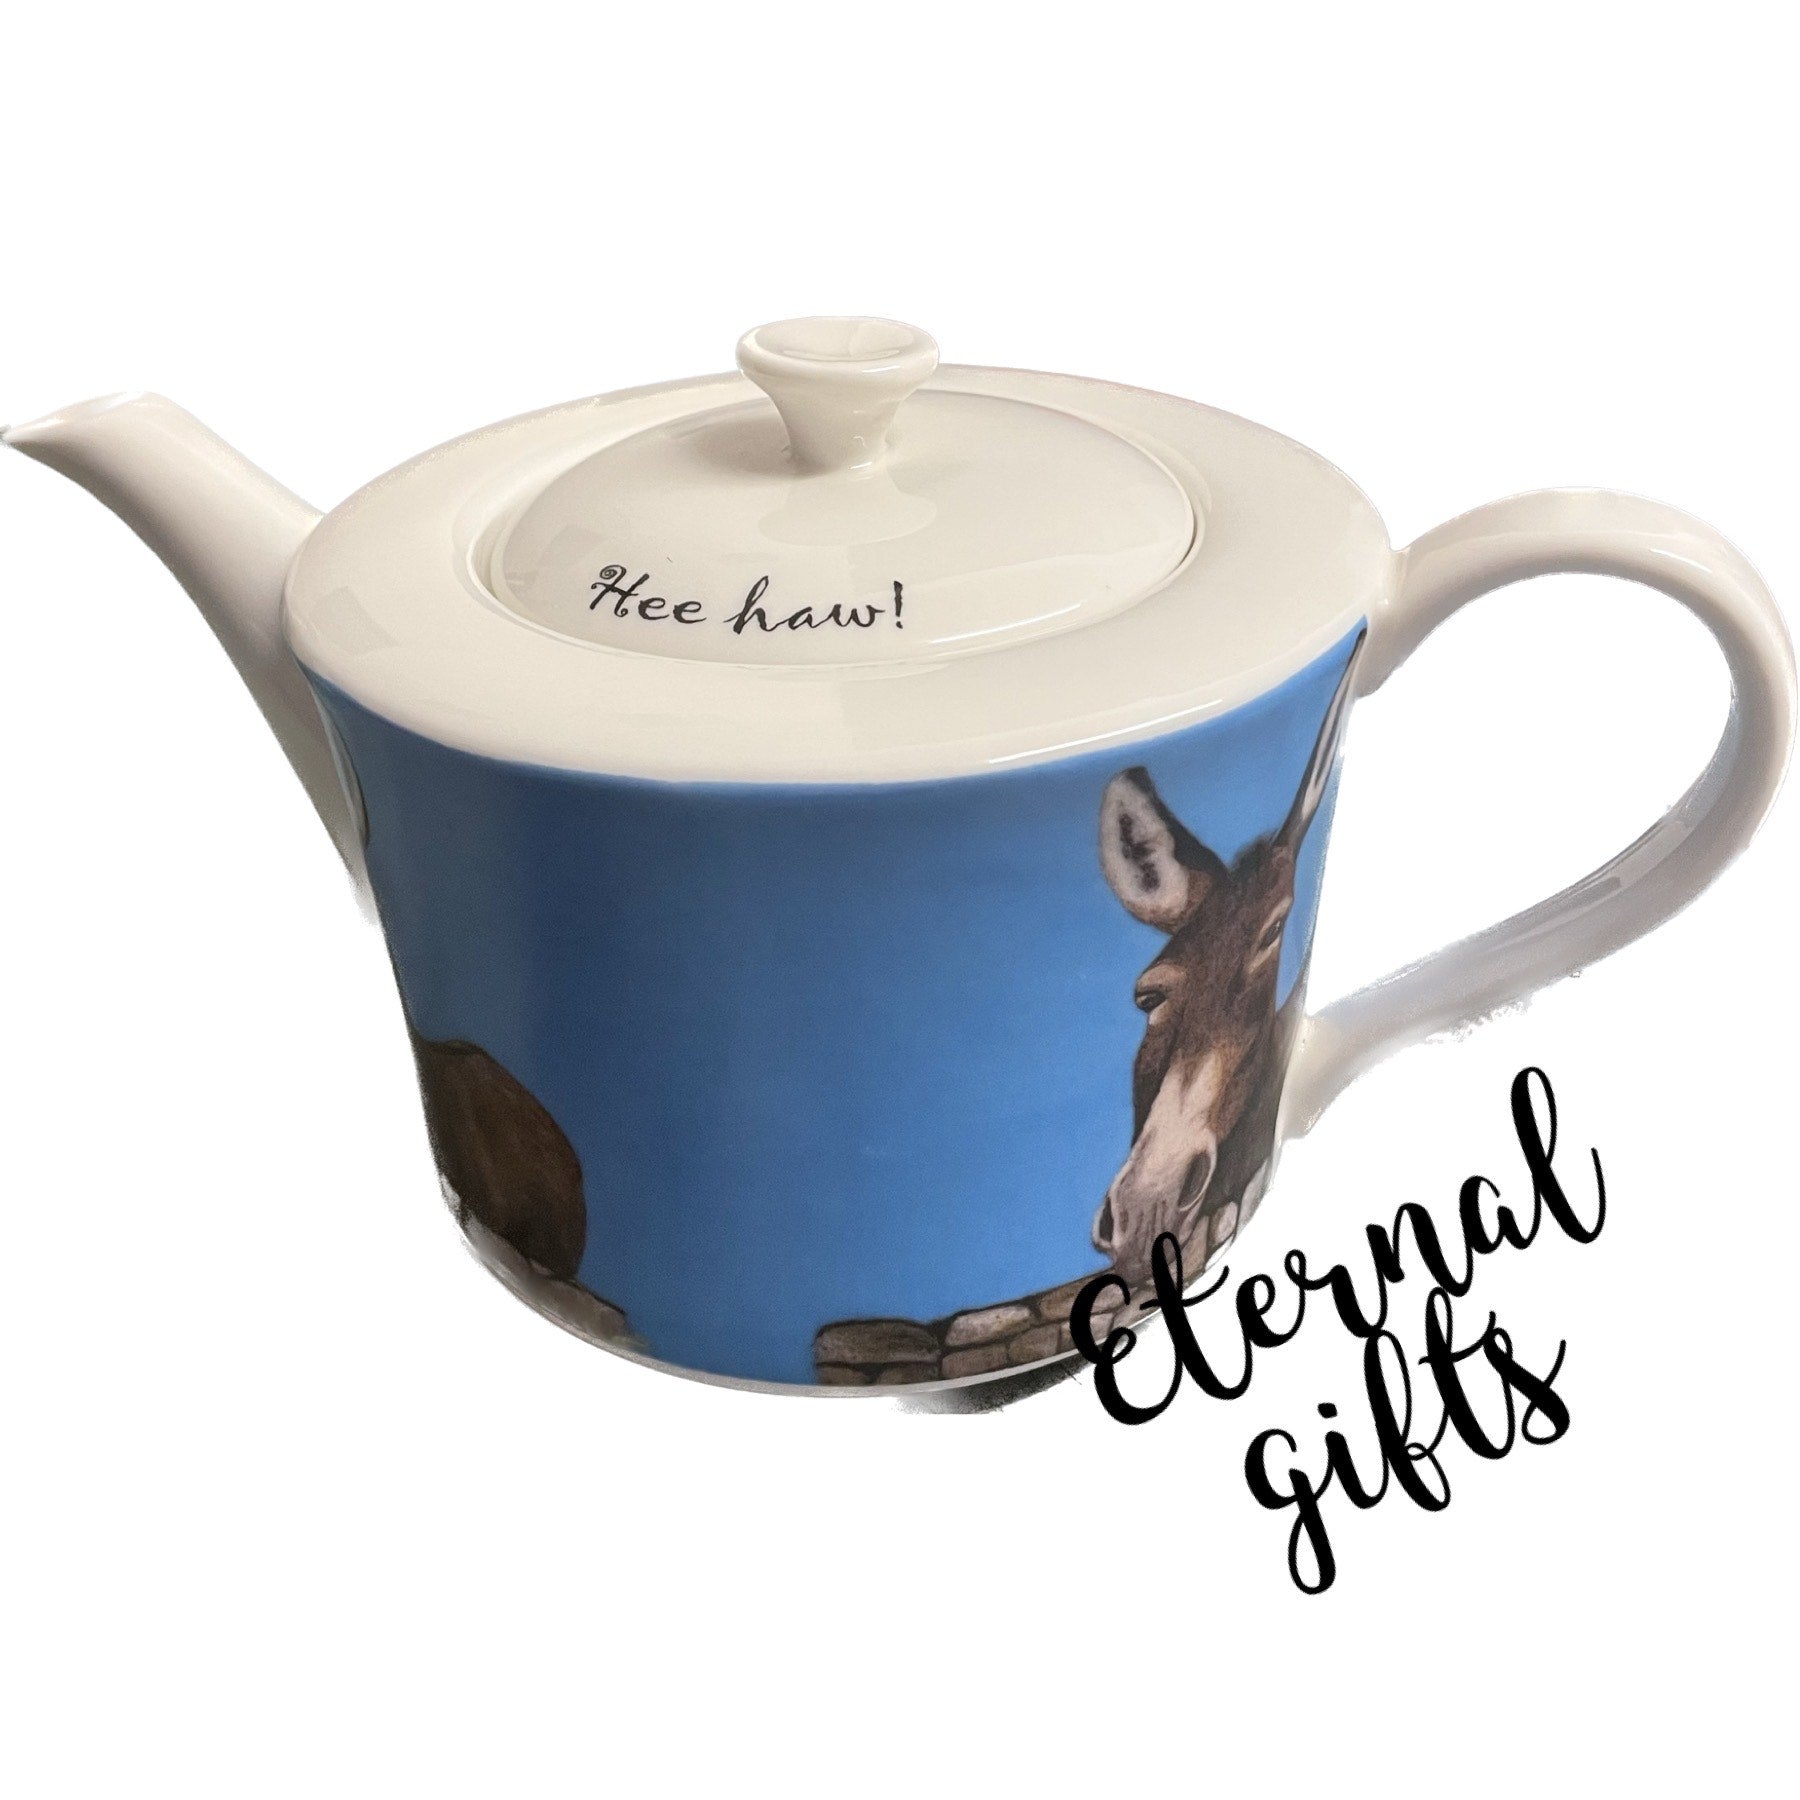 HeeHaw (Donkey) 4 cup Teapot by Shannonbridge Pottery